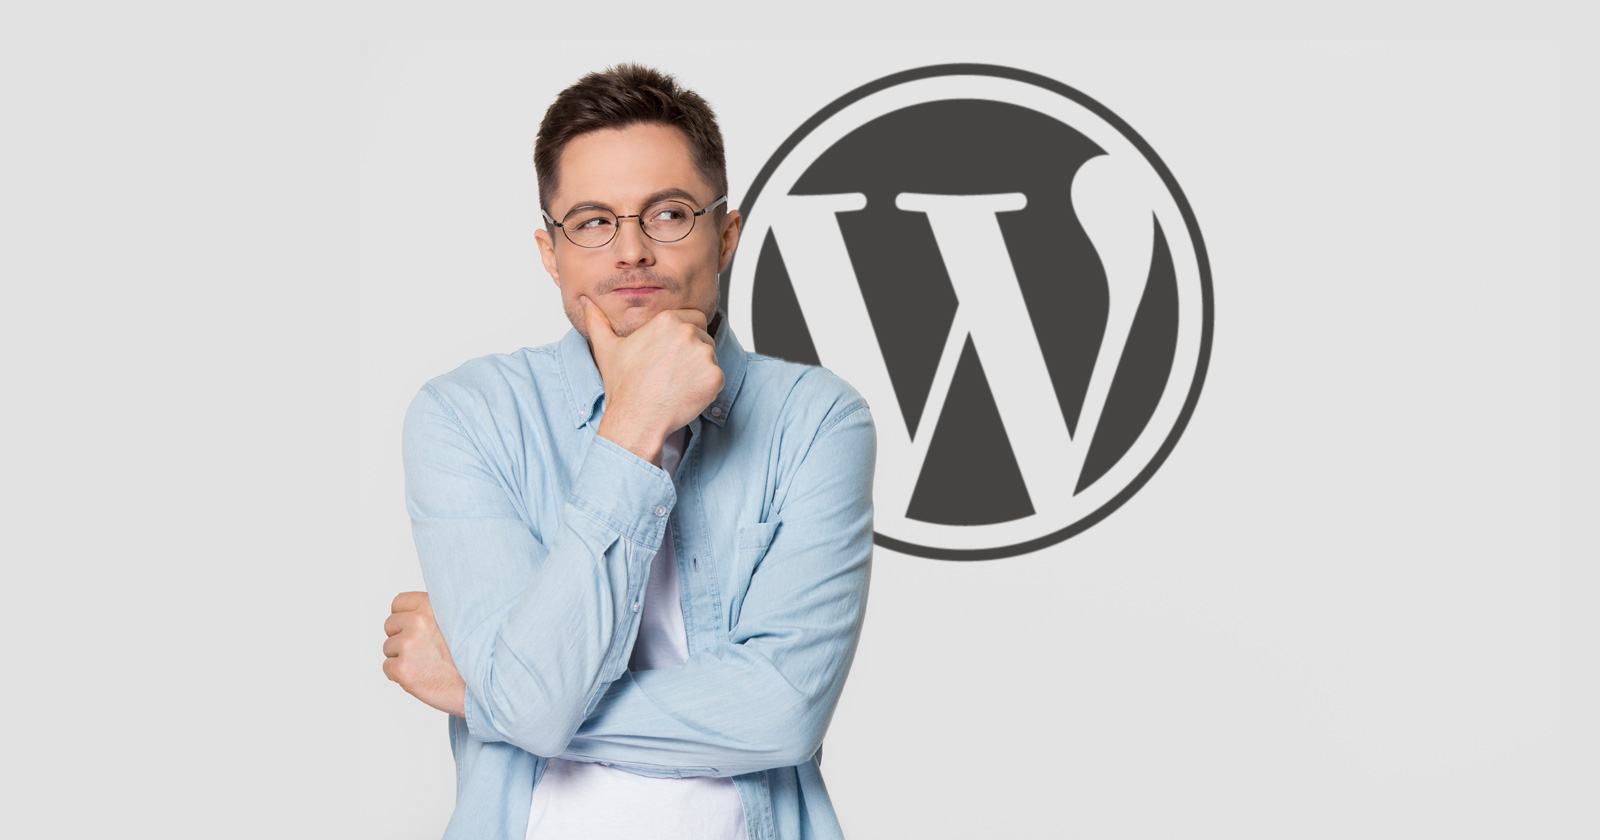 WordPress Admin Interface Is "Simply Bad"